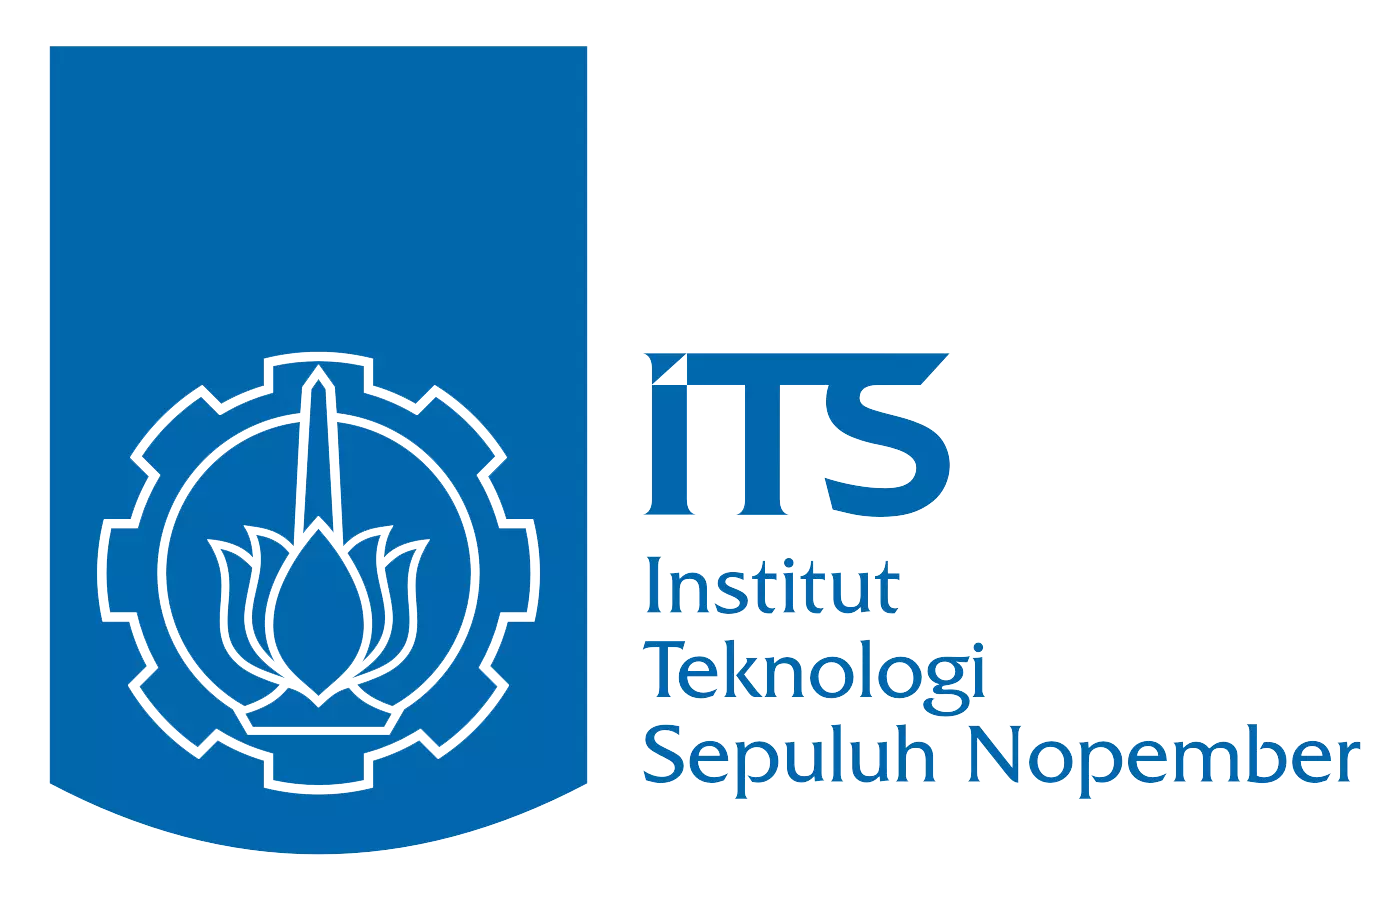 Sepuluh Nopember Institute of Technology